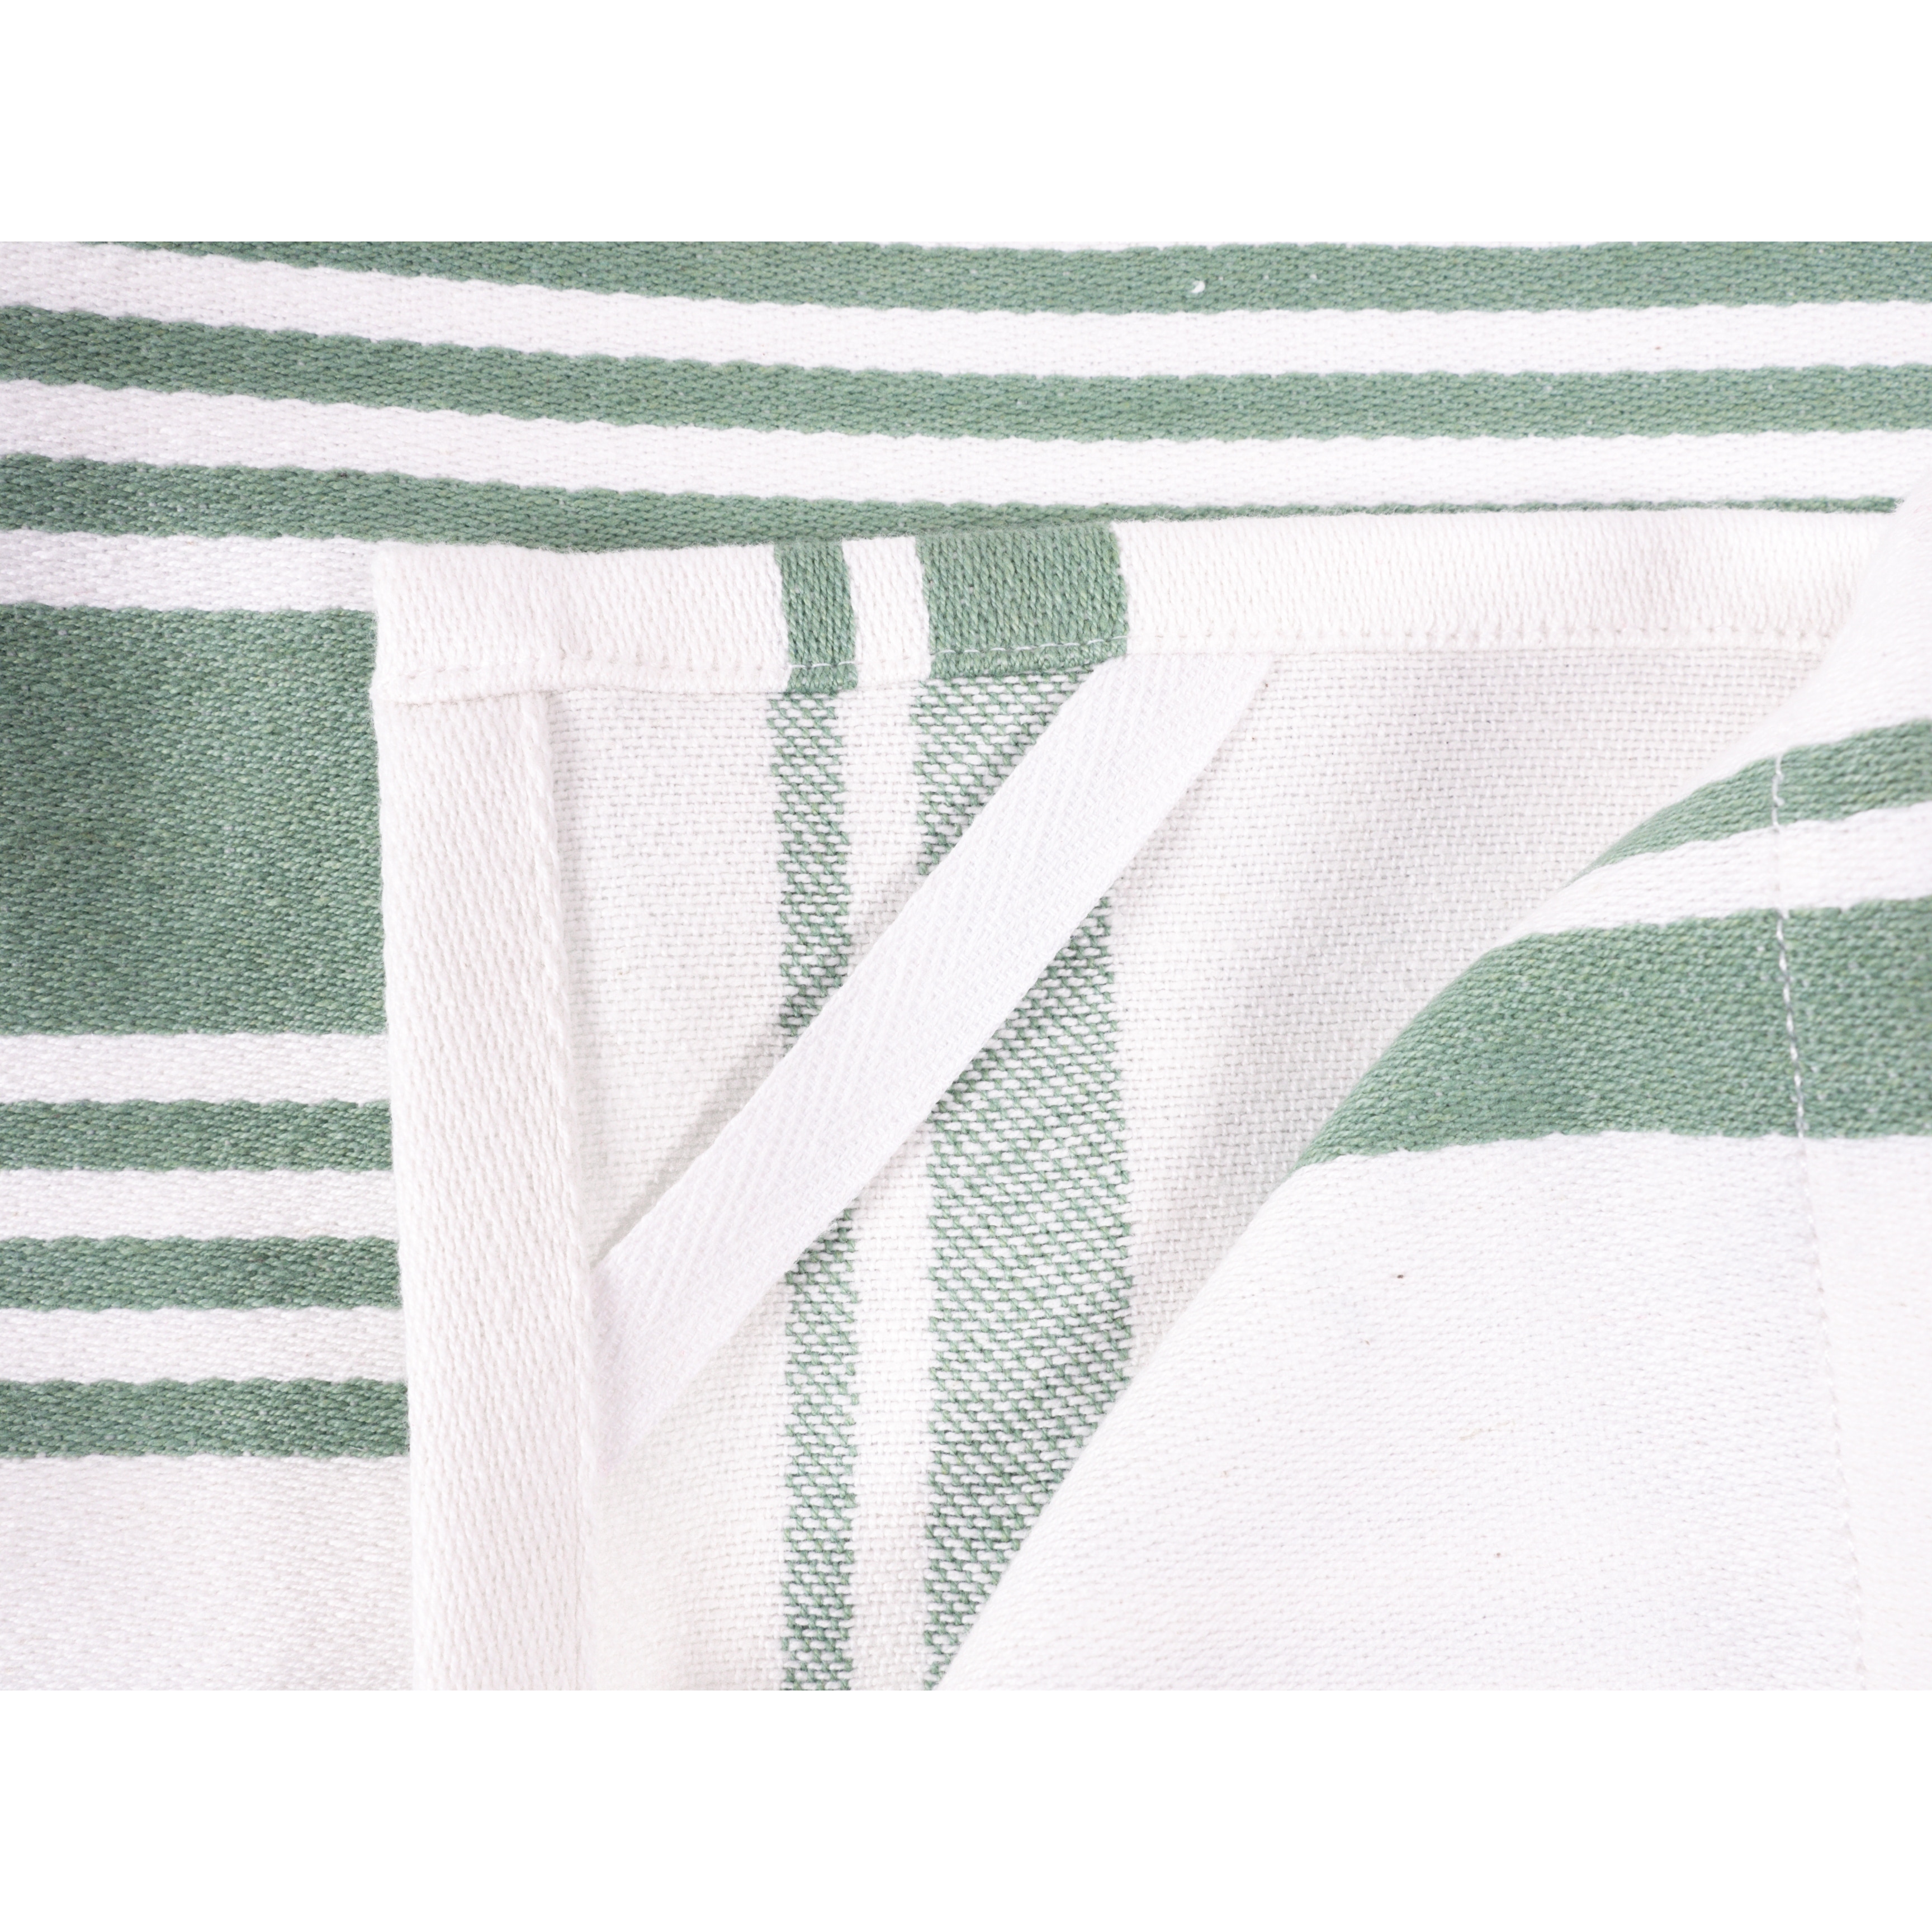 Buy Busatti Kitchen Towel Thick Stripe Design - Green & White at